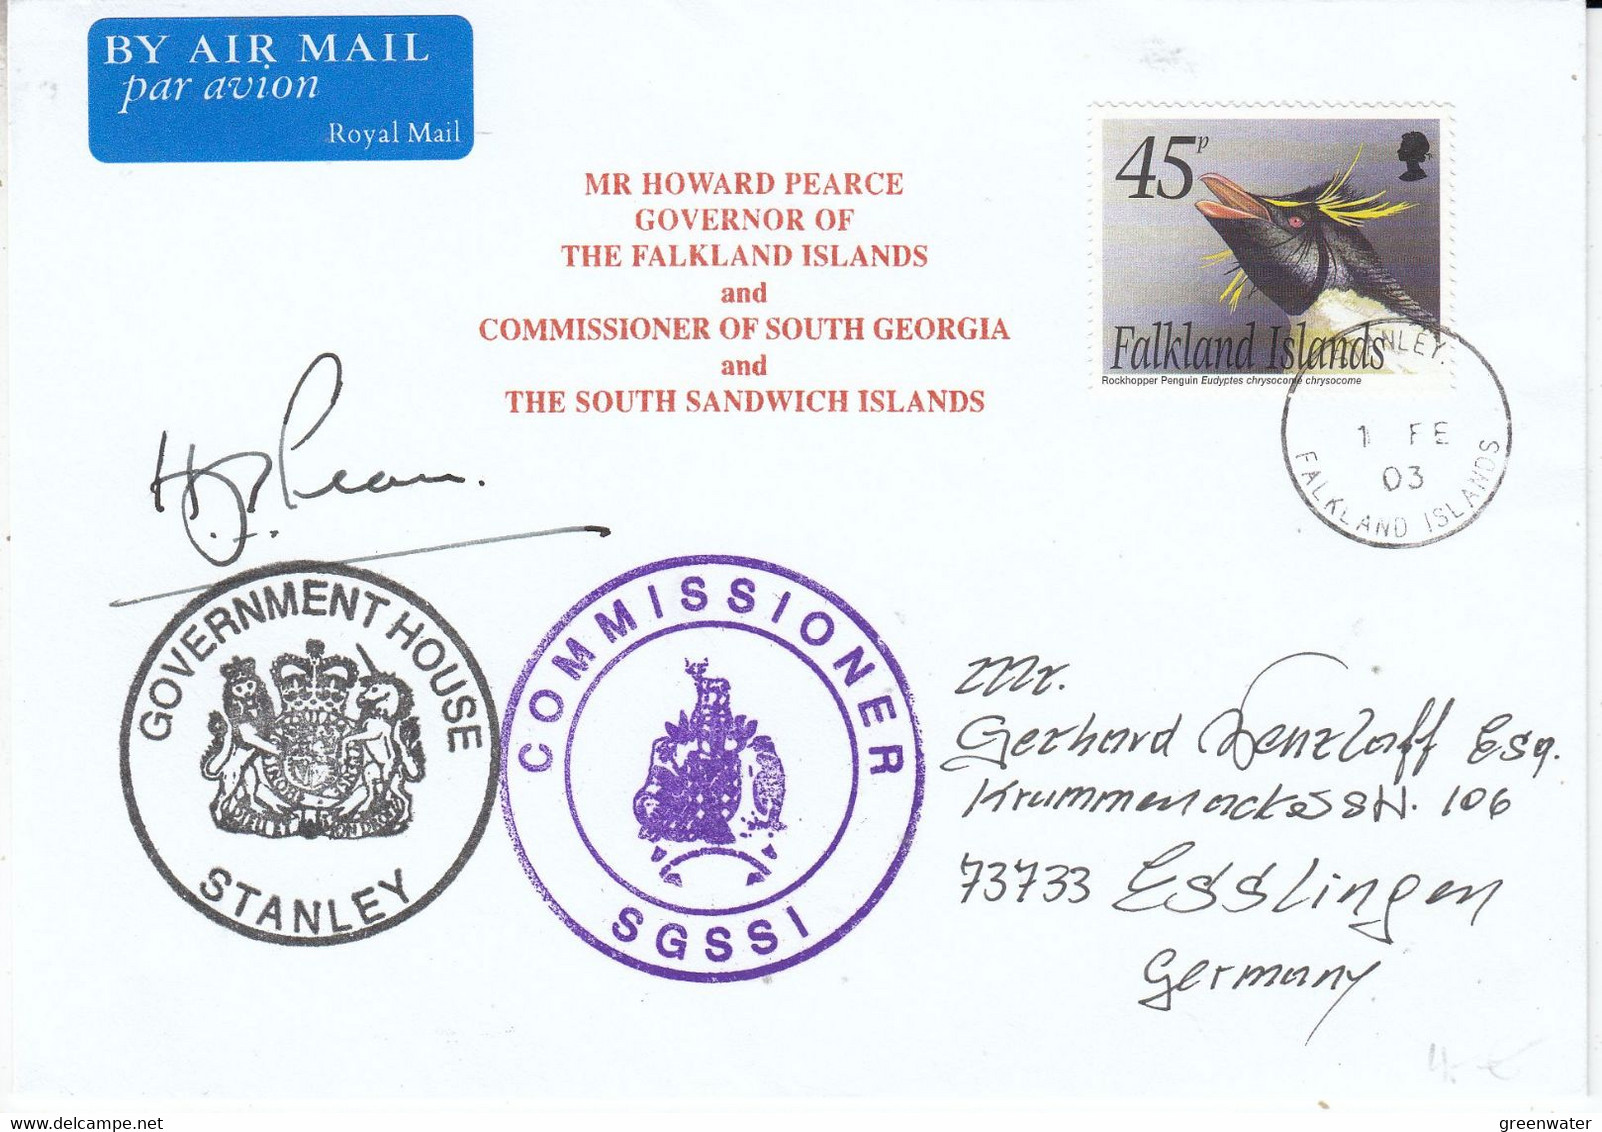 Falkland Islands 2003 Cover Send By Howard Pearce Governor Of The Falkland Islands, Signed CA Stanley 1 FE 2003 (FI206) - Falkland